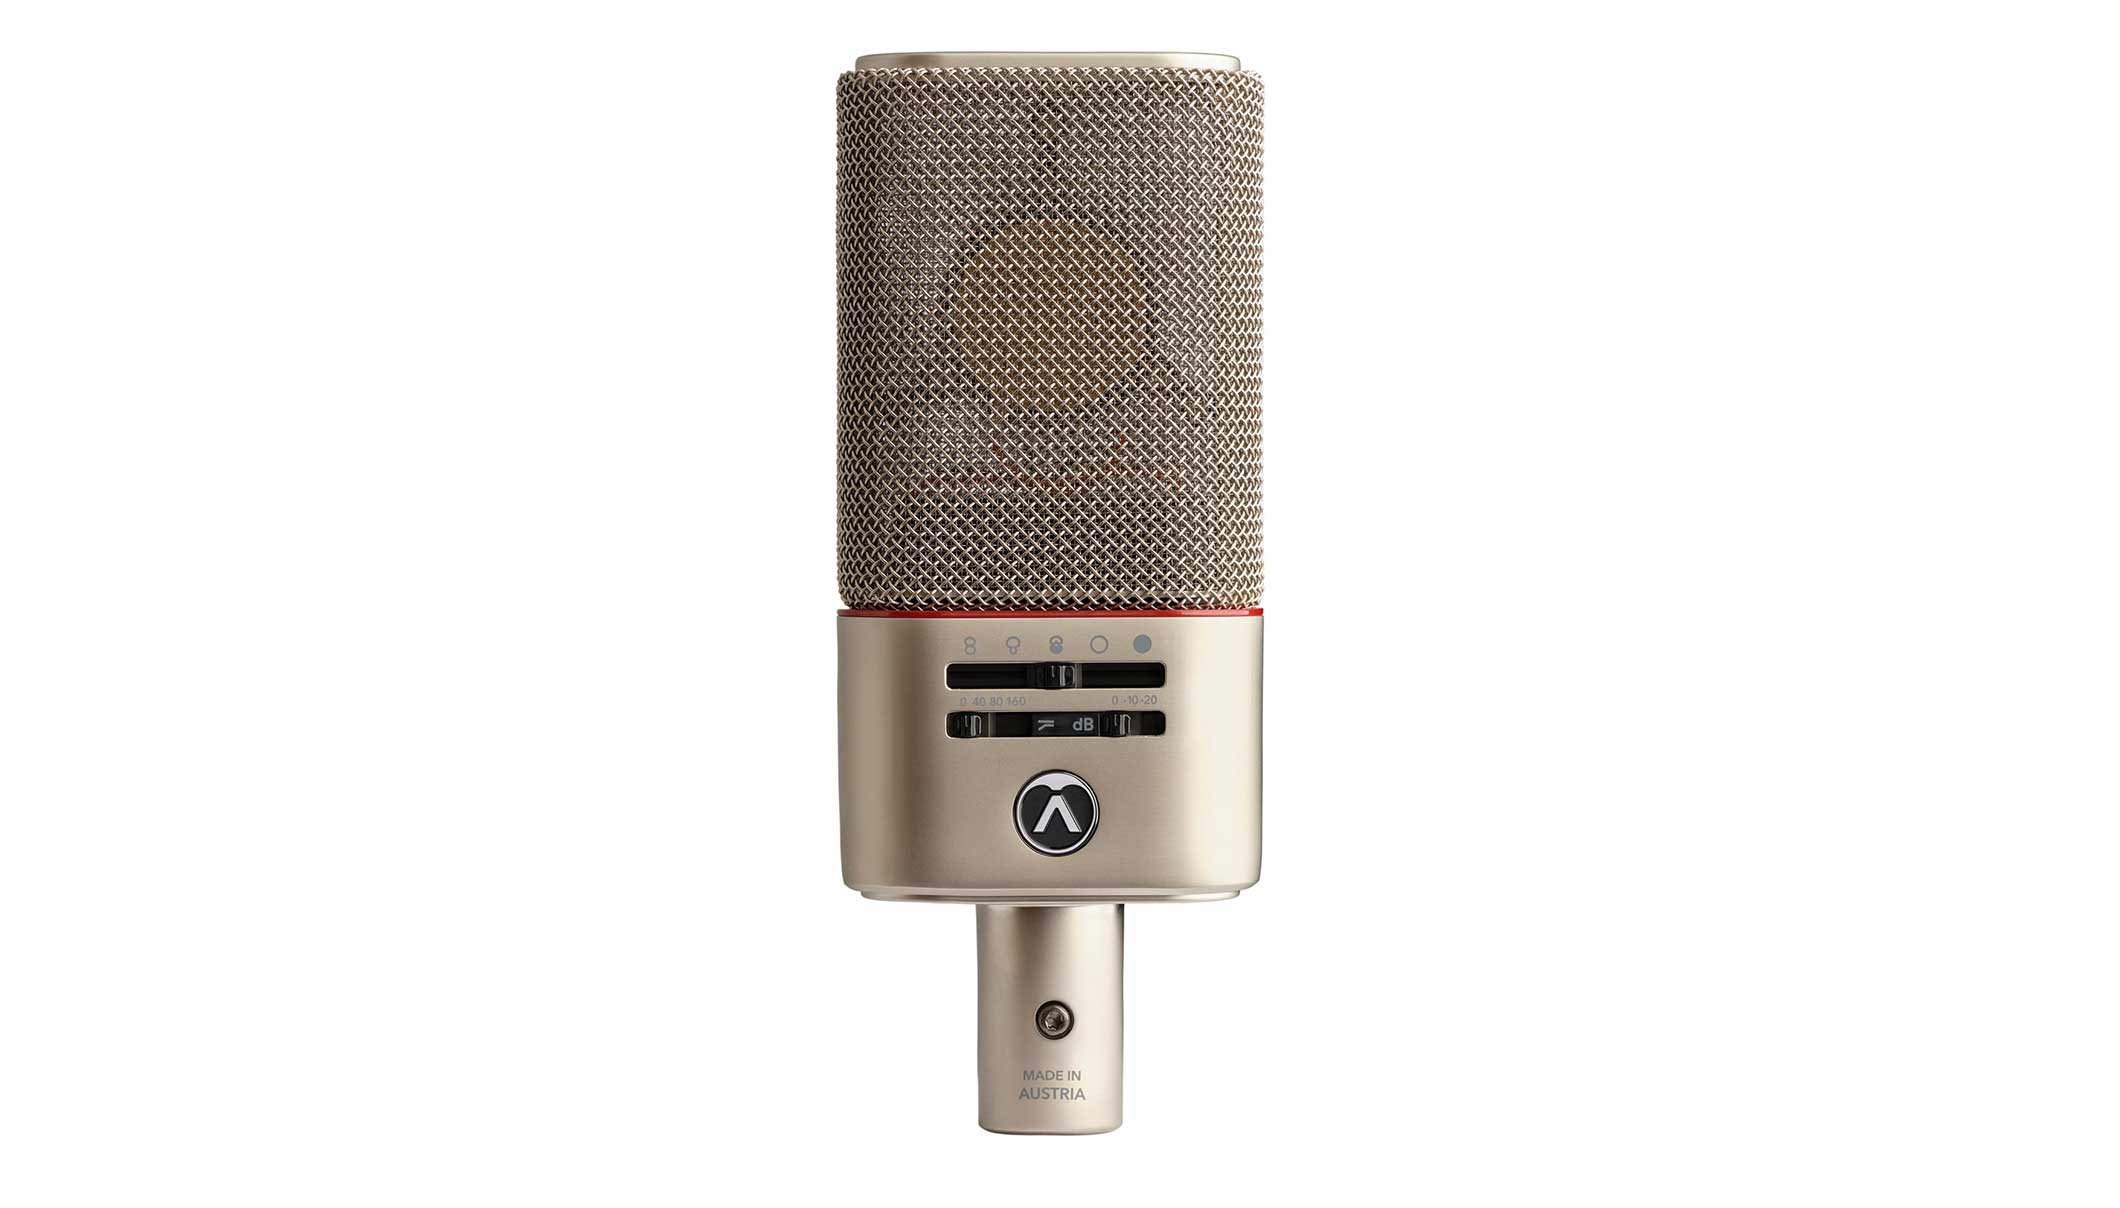 Austrian Audio OC818 Studio Set по цене 149 990.00 ₽